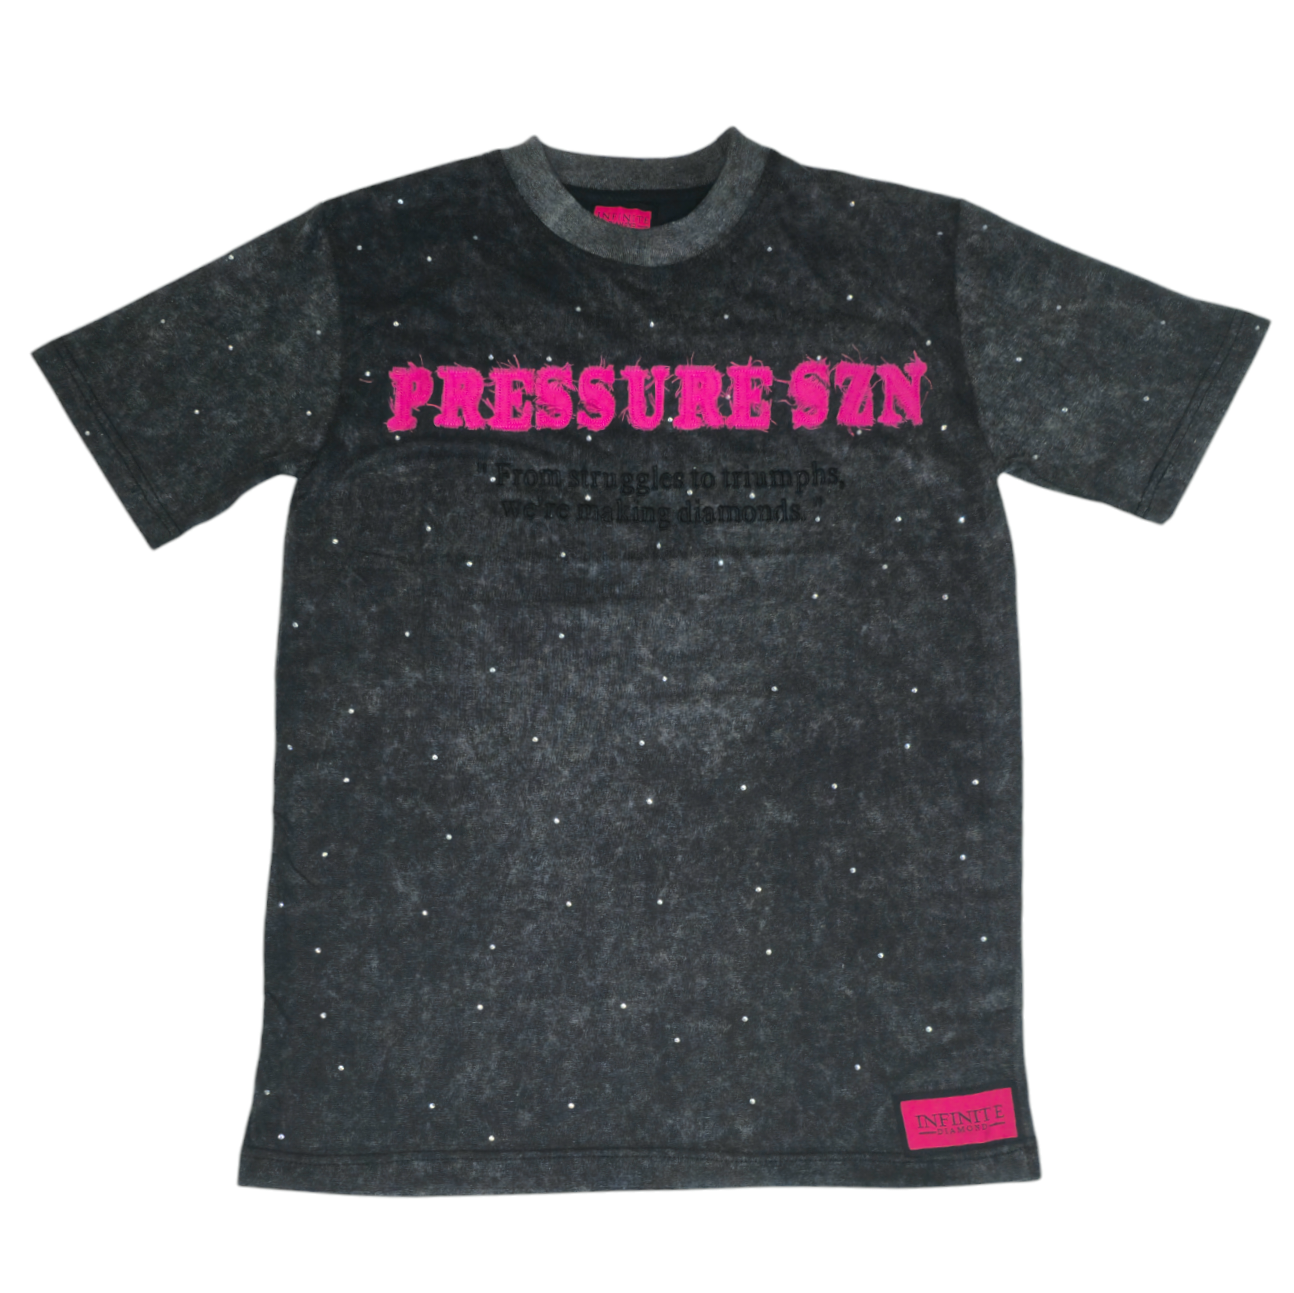 Pressure Szn T Shirt